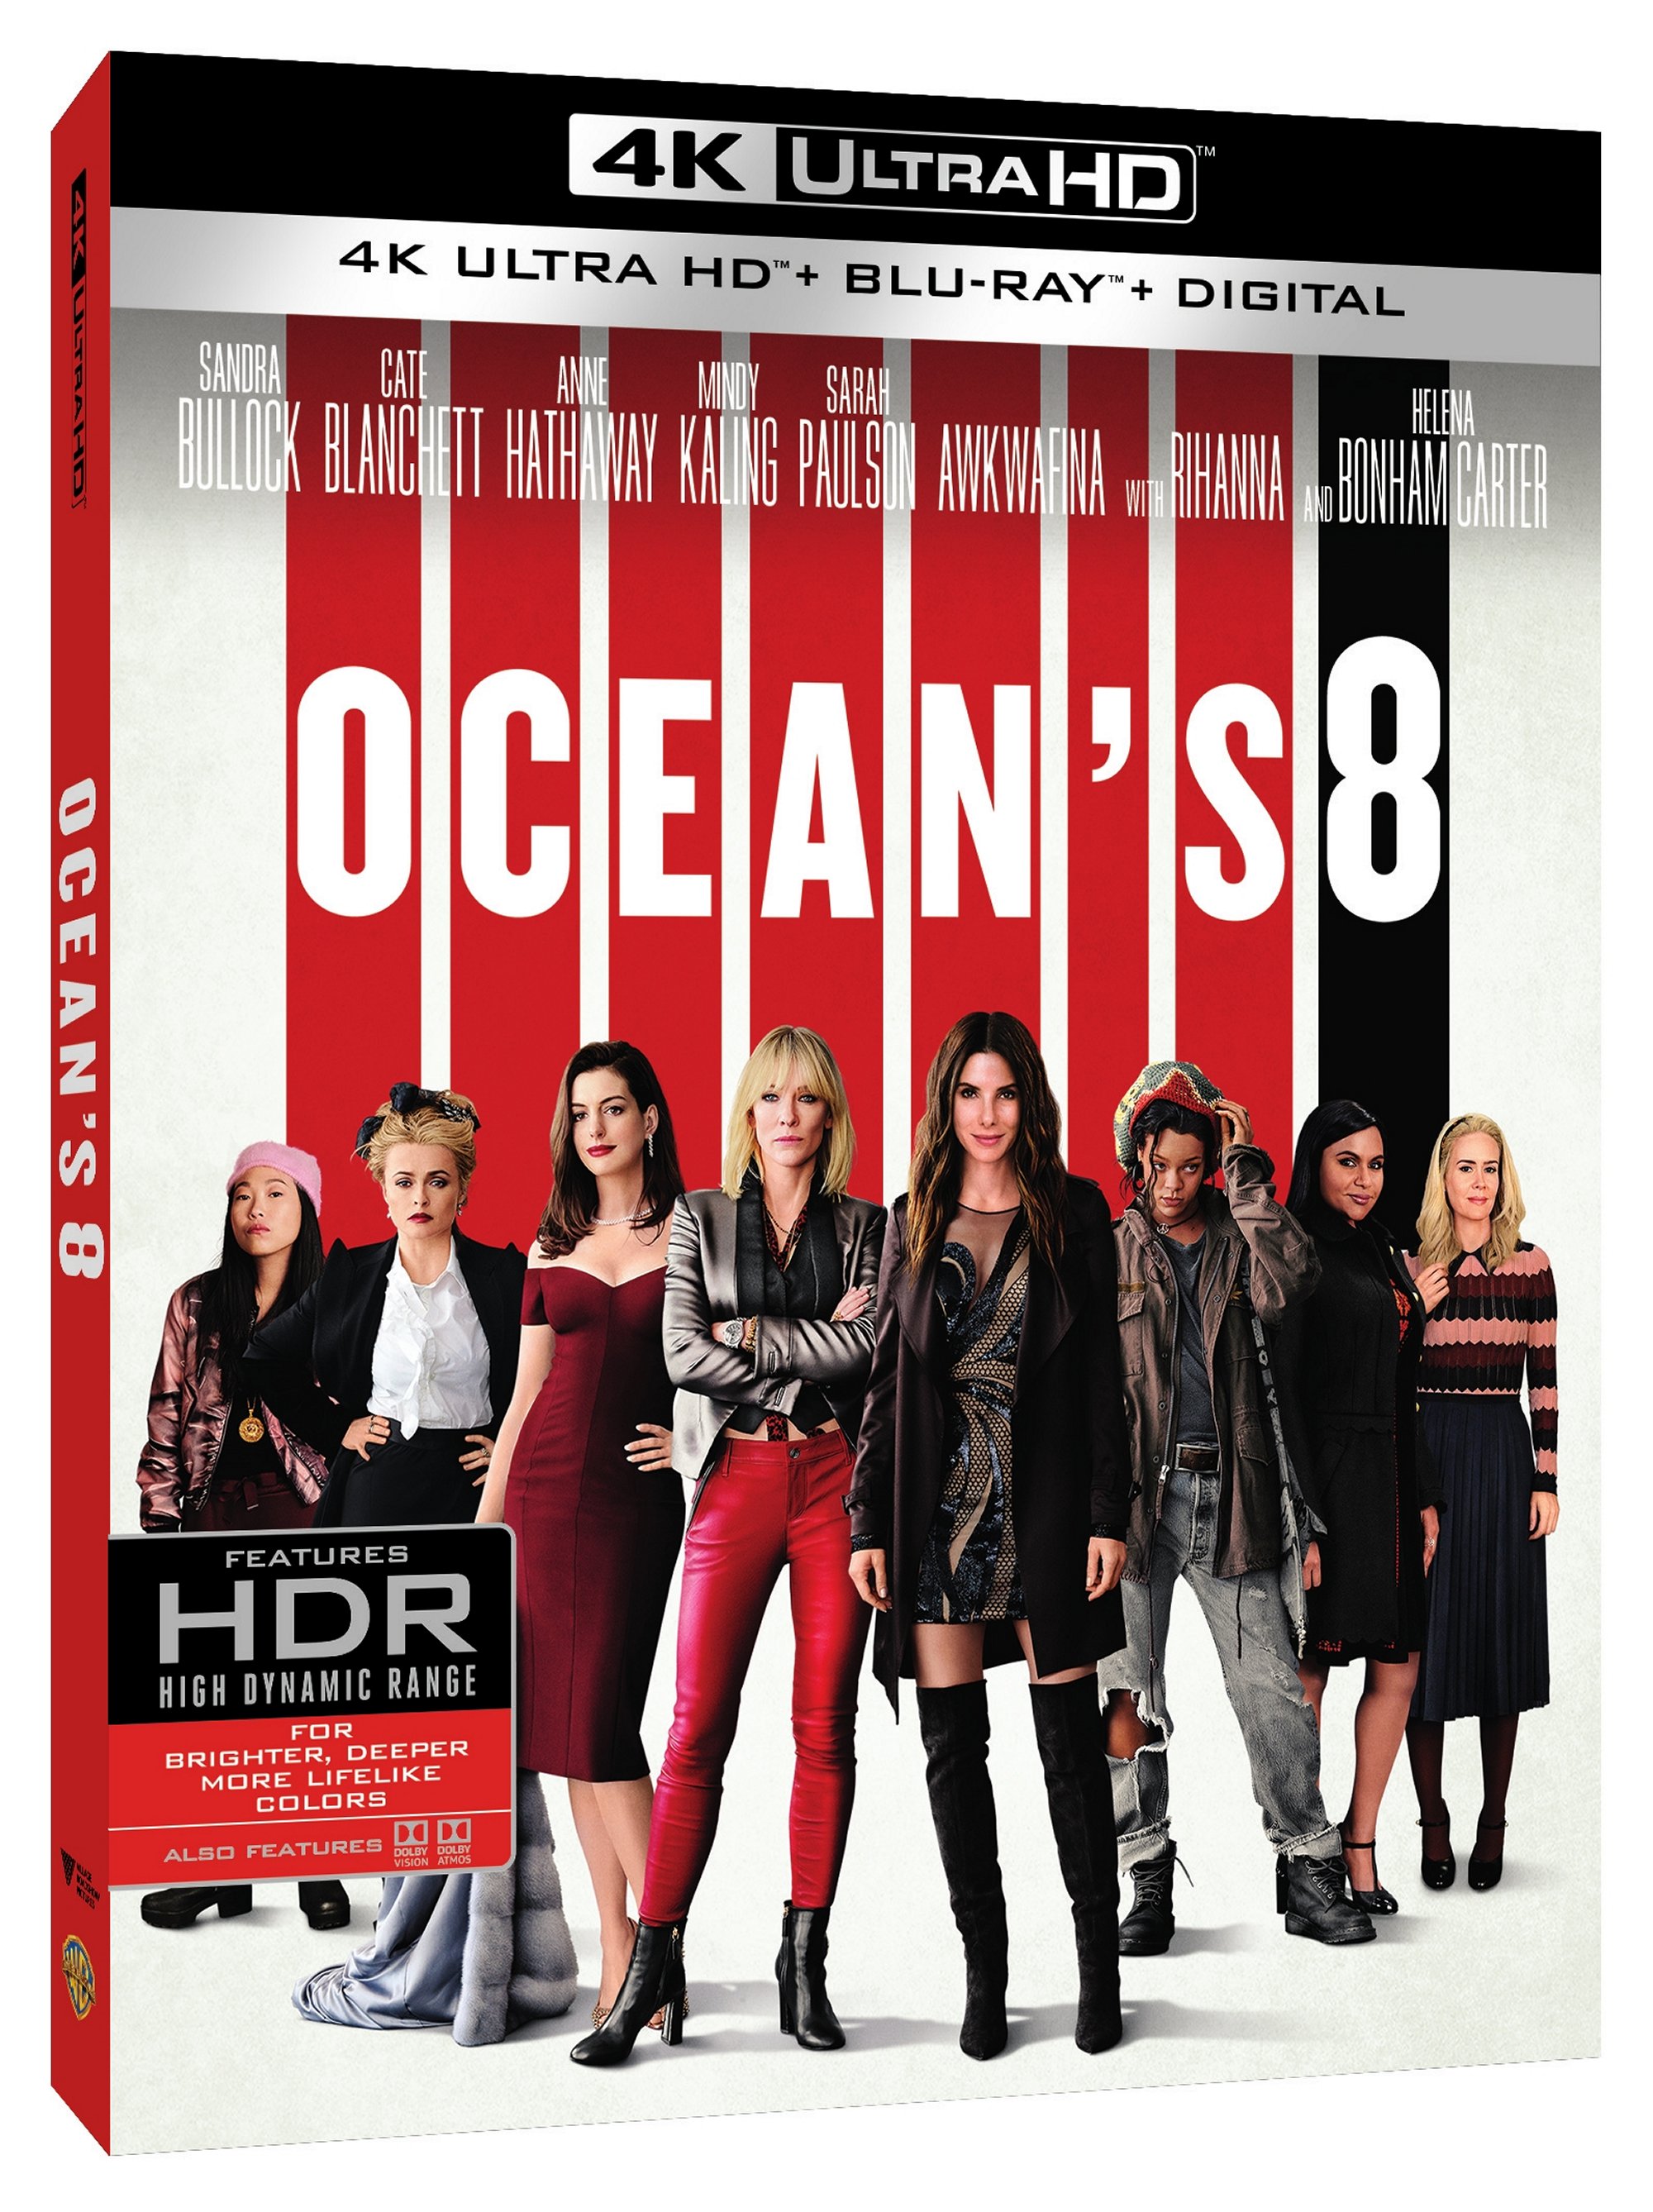 Ocean's 8 4K Ultra HD cover (Warner Bros. Home Entertainment)